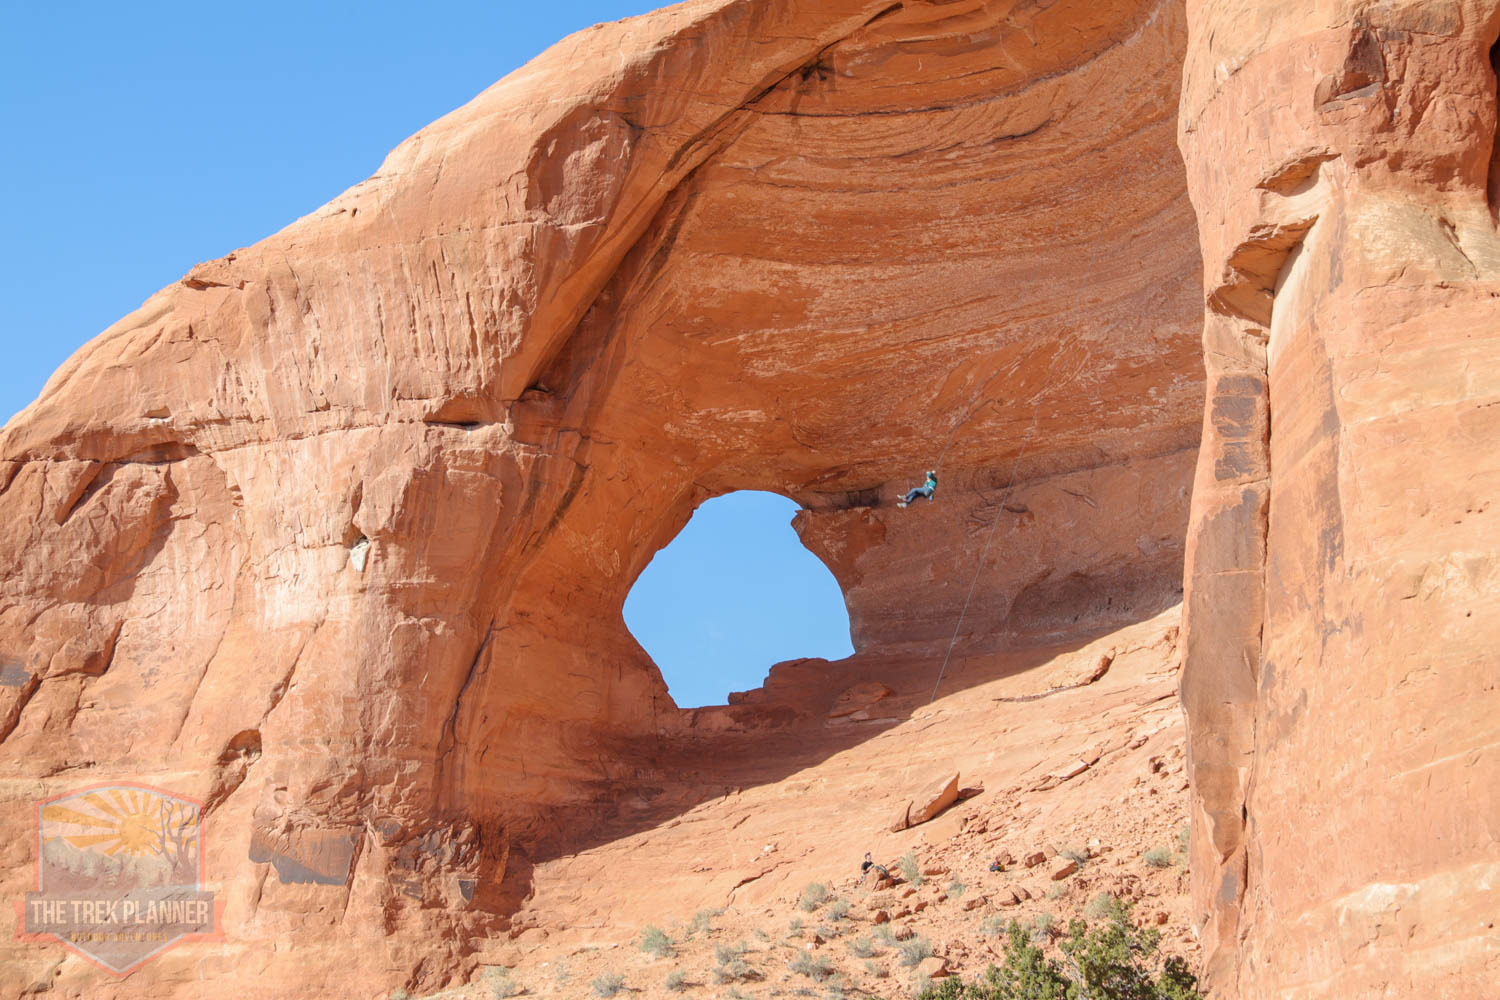 Looking Glass Rock – near Moab, Utah